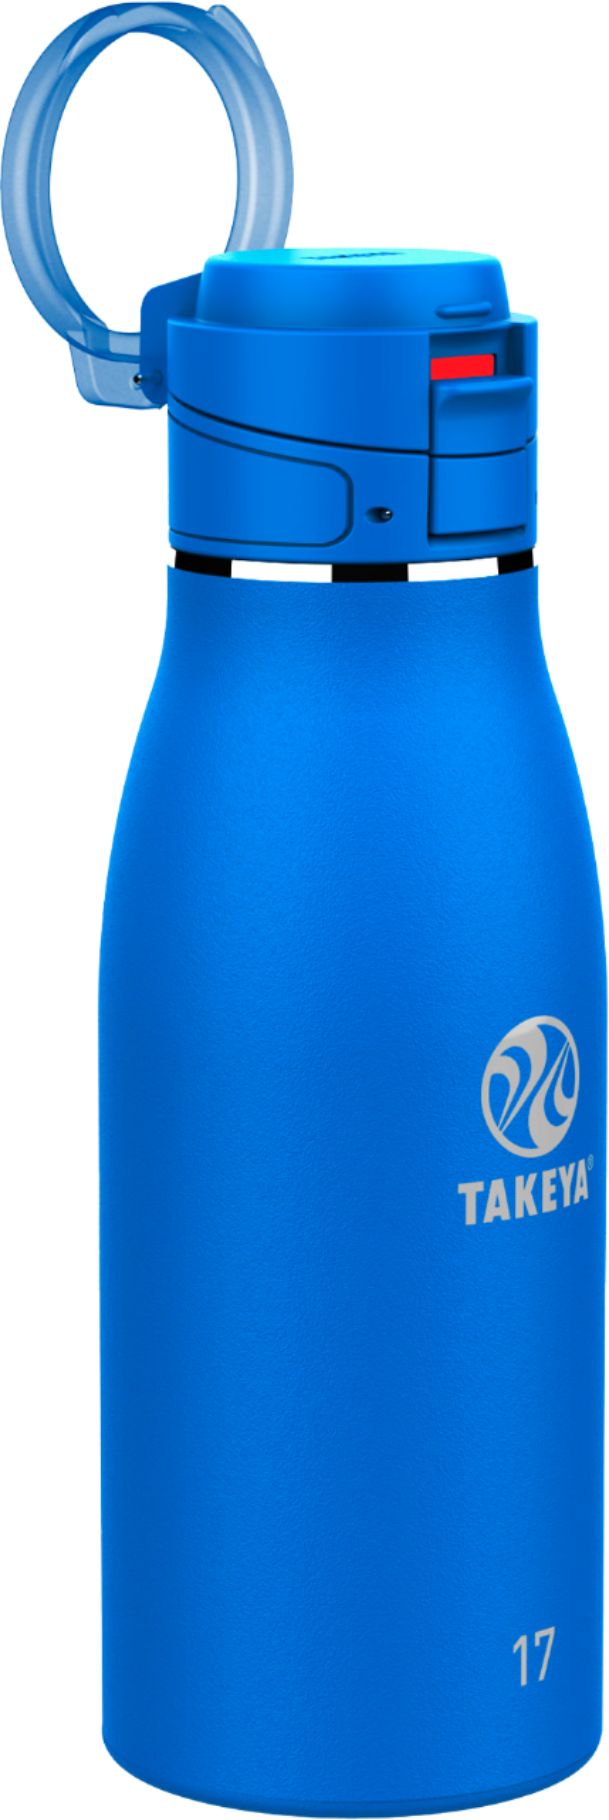 Takeya Traveler Mug, 17 oz, Aqua